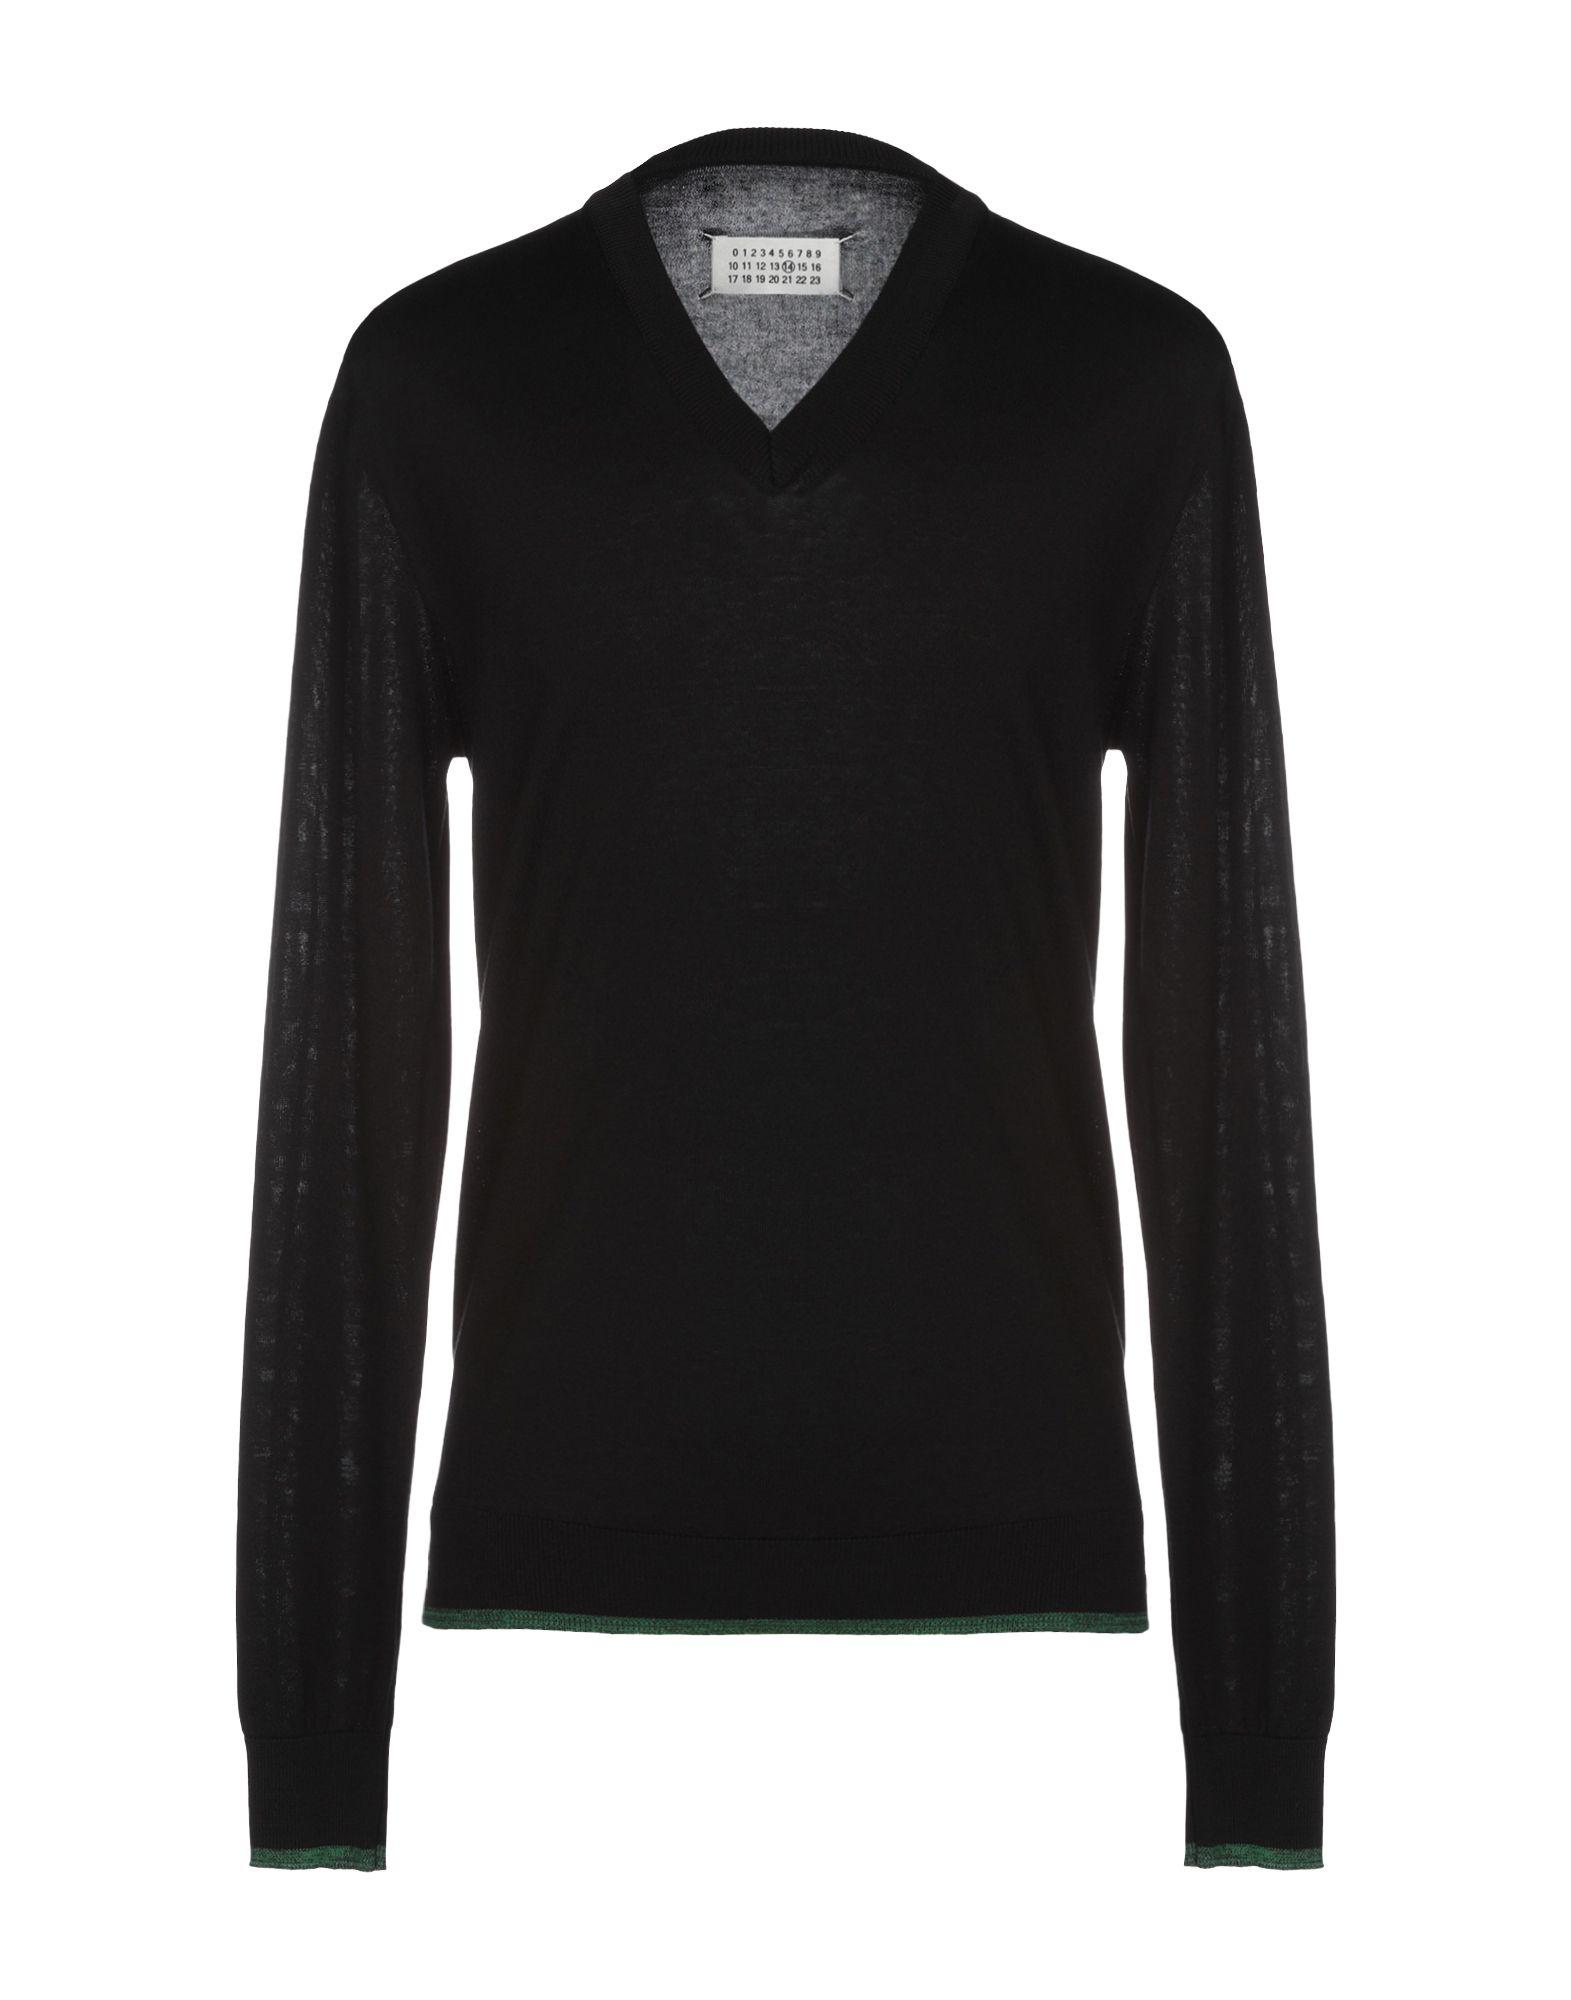 Maison Margiela Cotton Sweater in Black for Men - Lyst